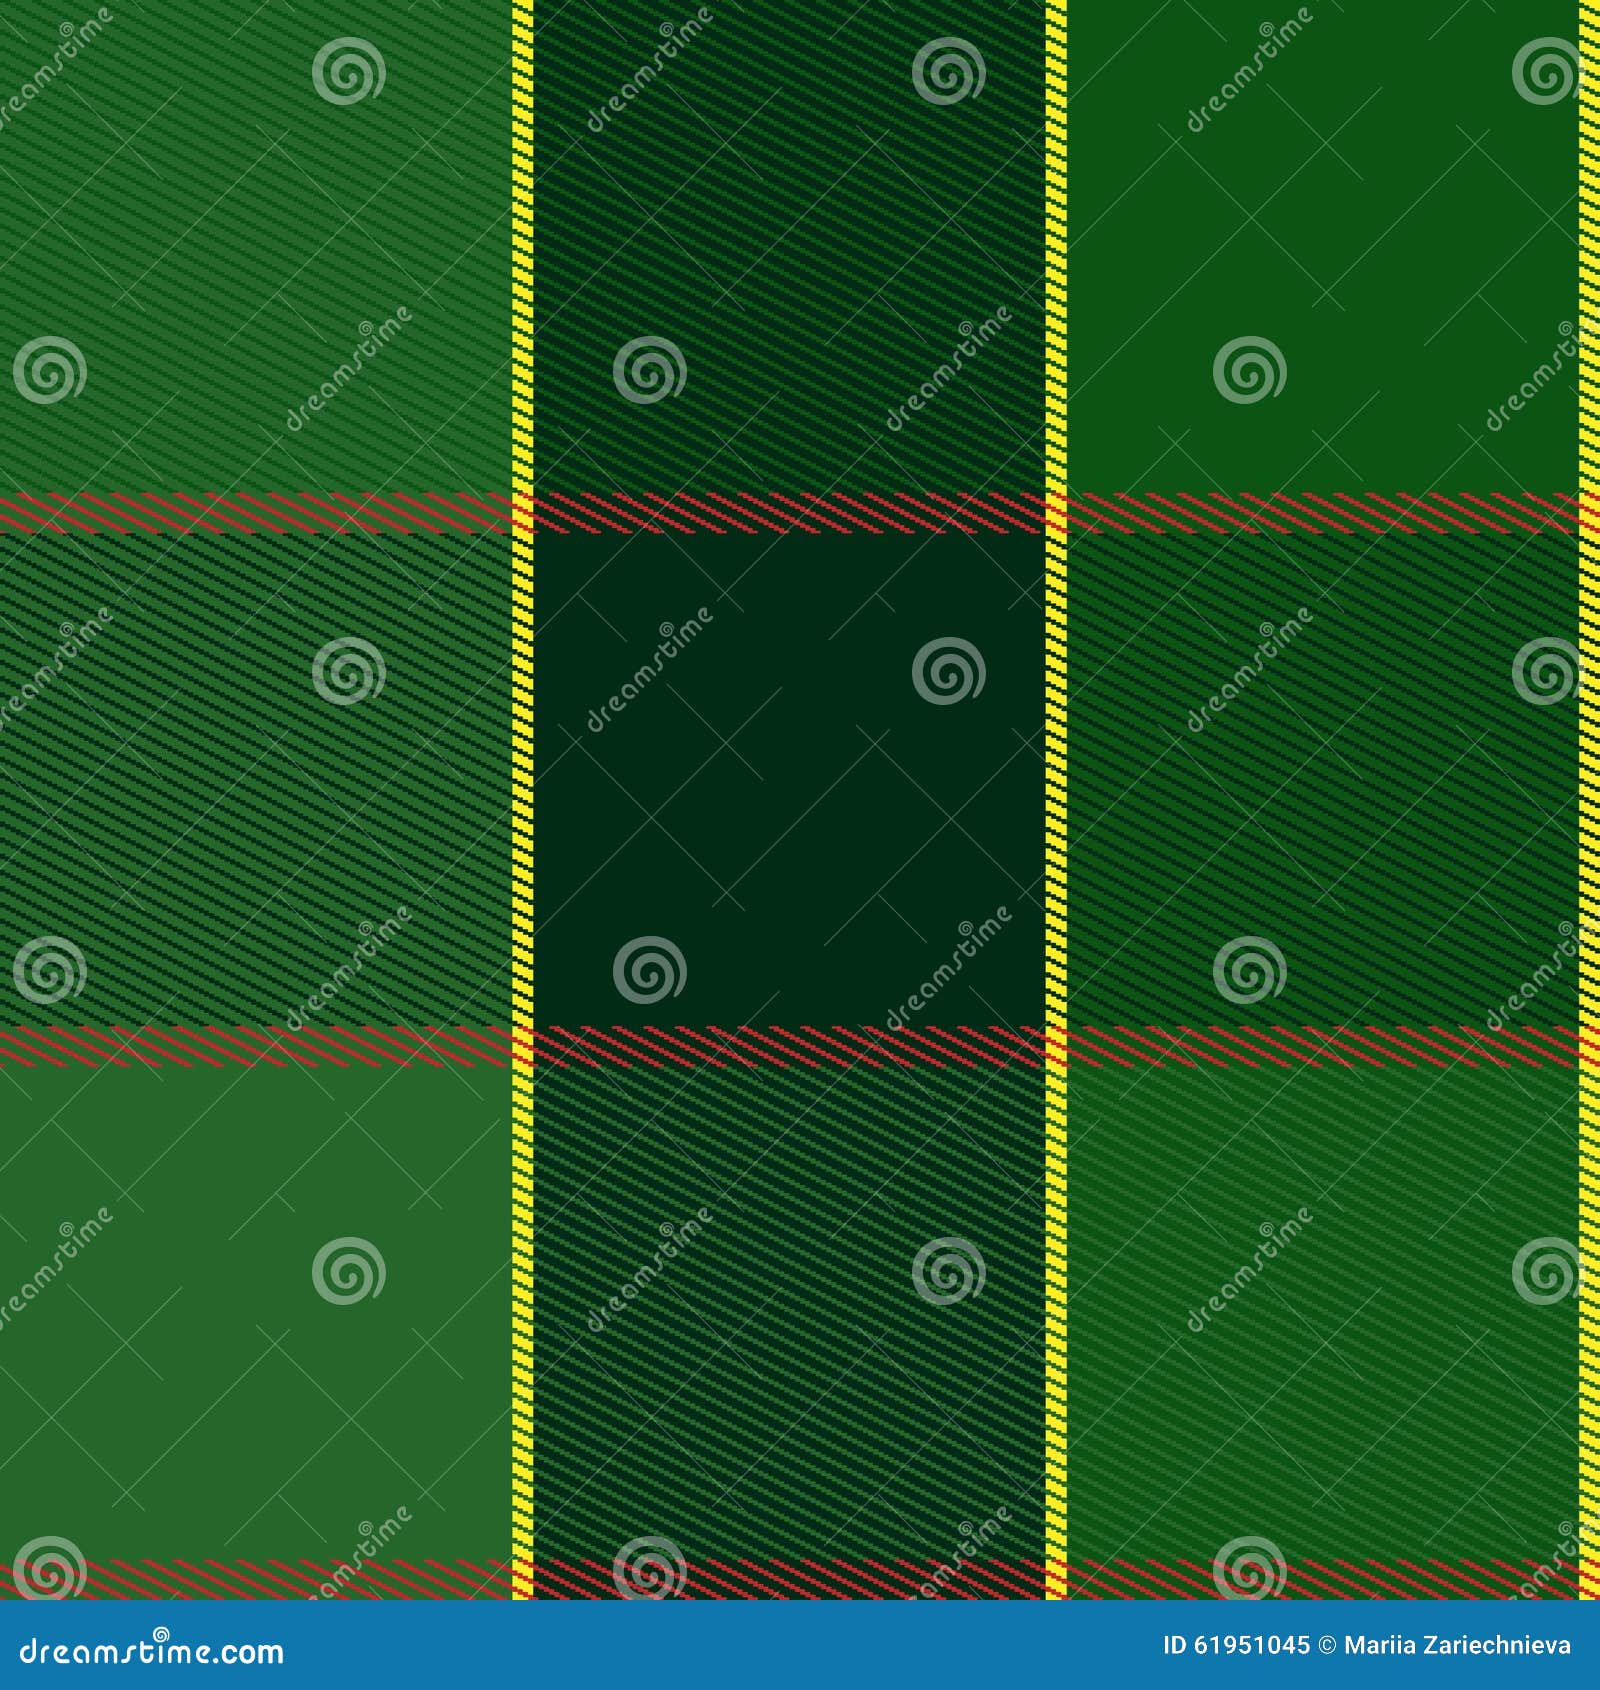 easy editable green checkered plaid  pattern